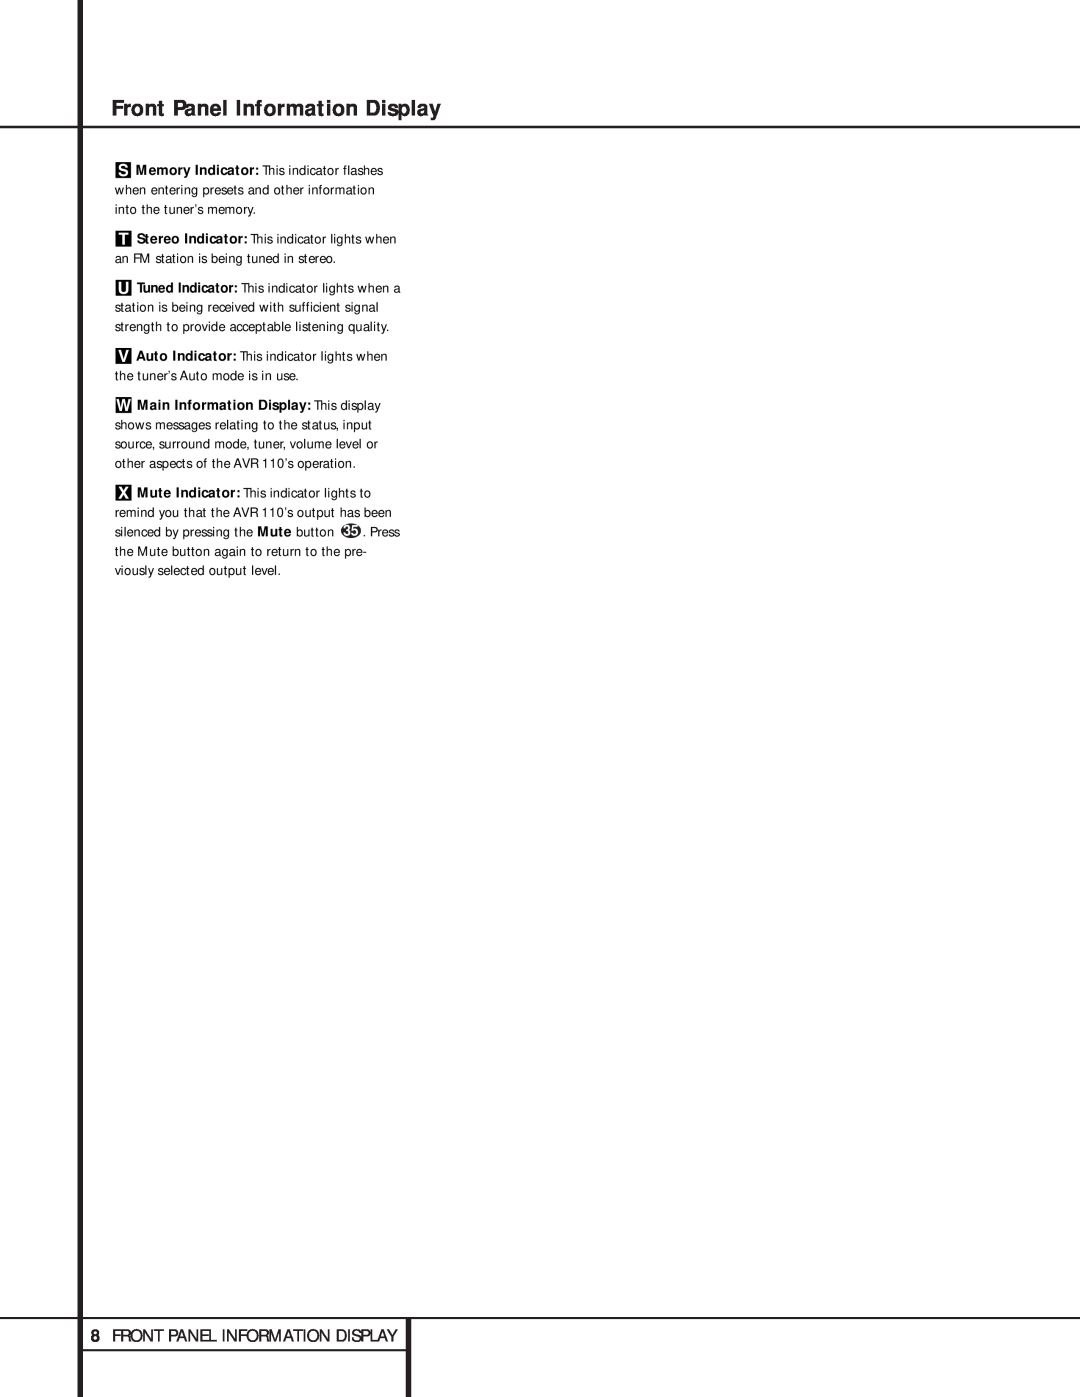 Harman-Kardon AVR 110 owner manual 8FRONT PANEL INFORMATION DISPLAY, Front Panel Information Display 